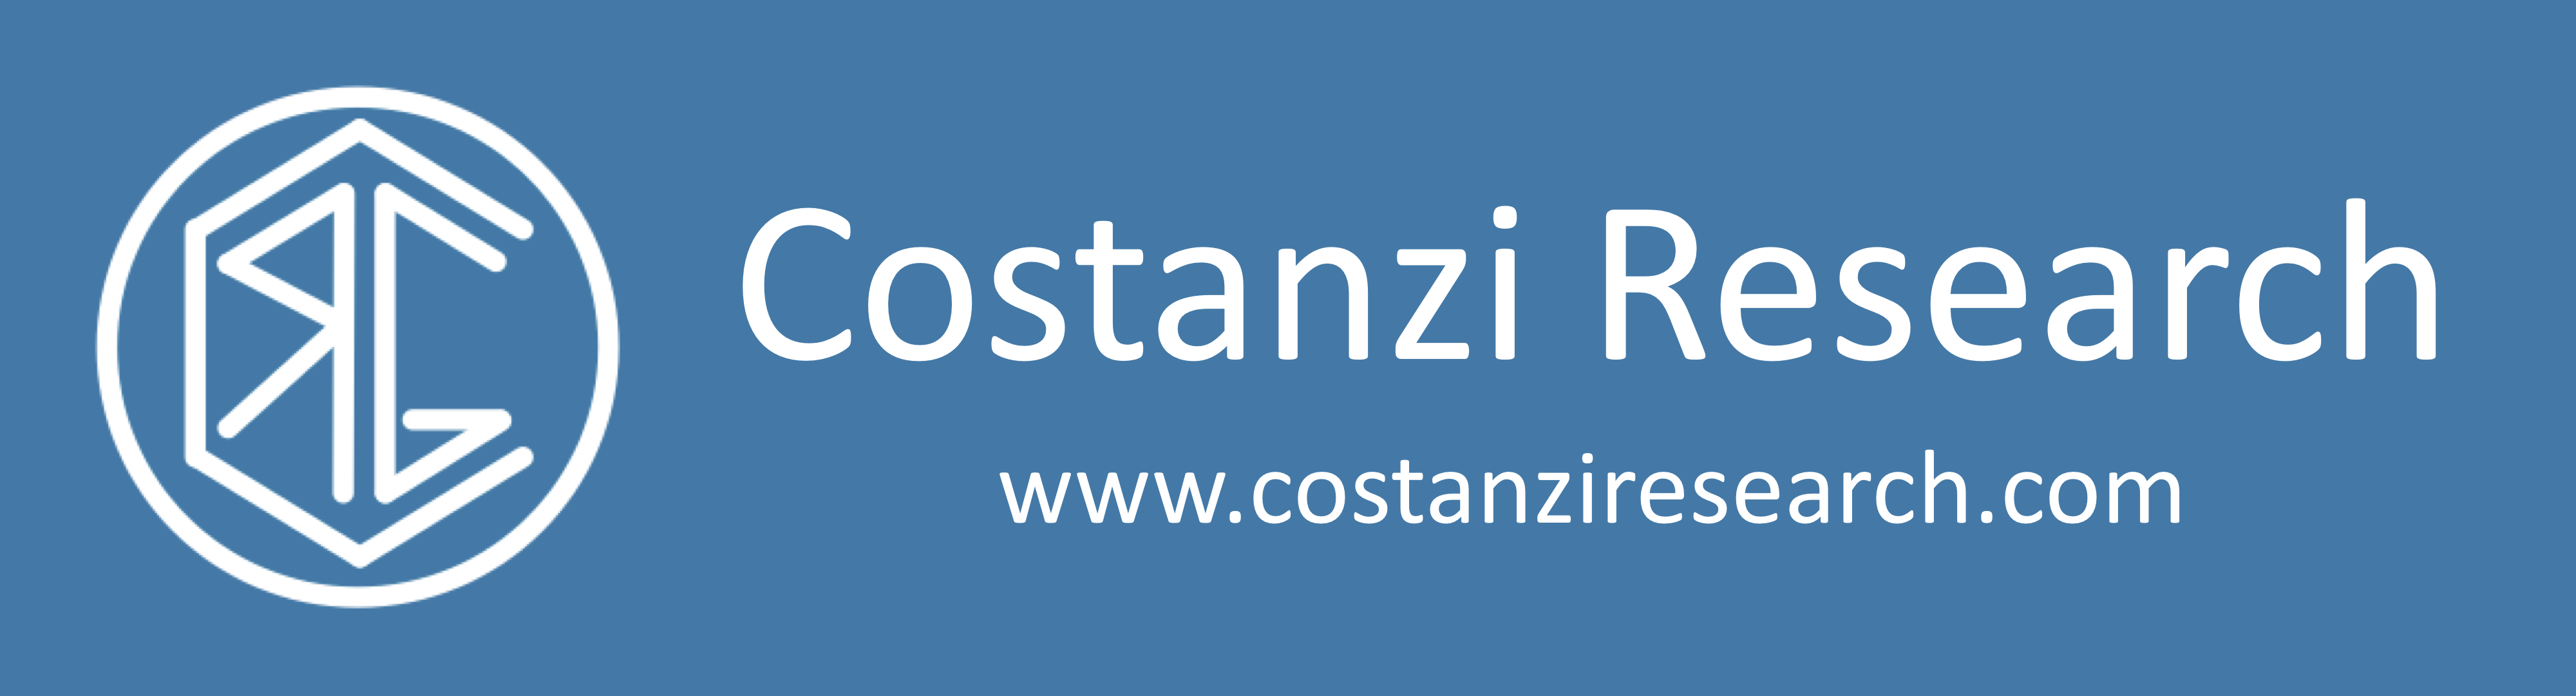 The Costanzi Research Group - www.costanziresearch.com